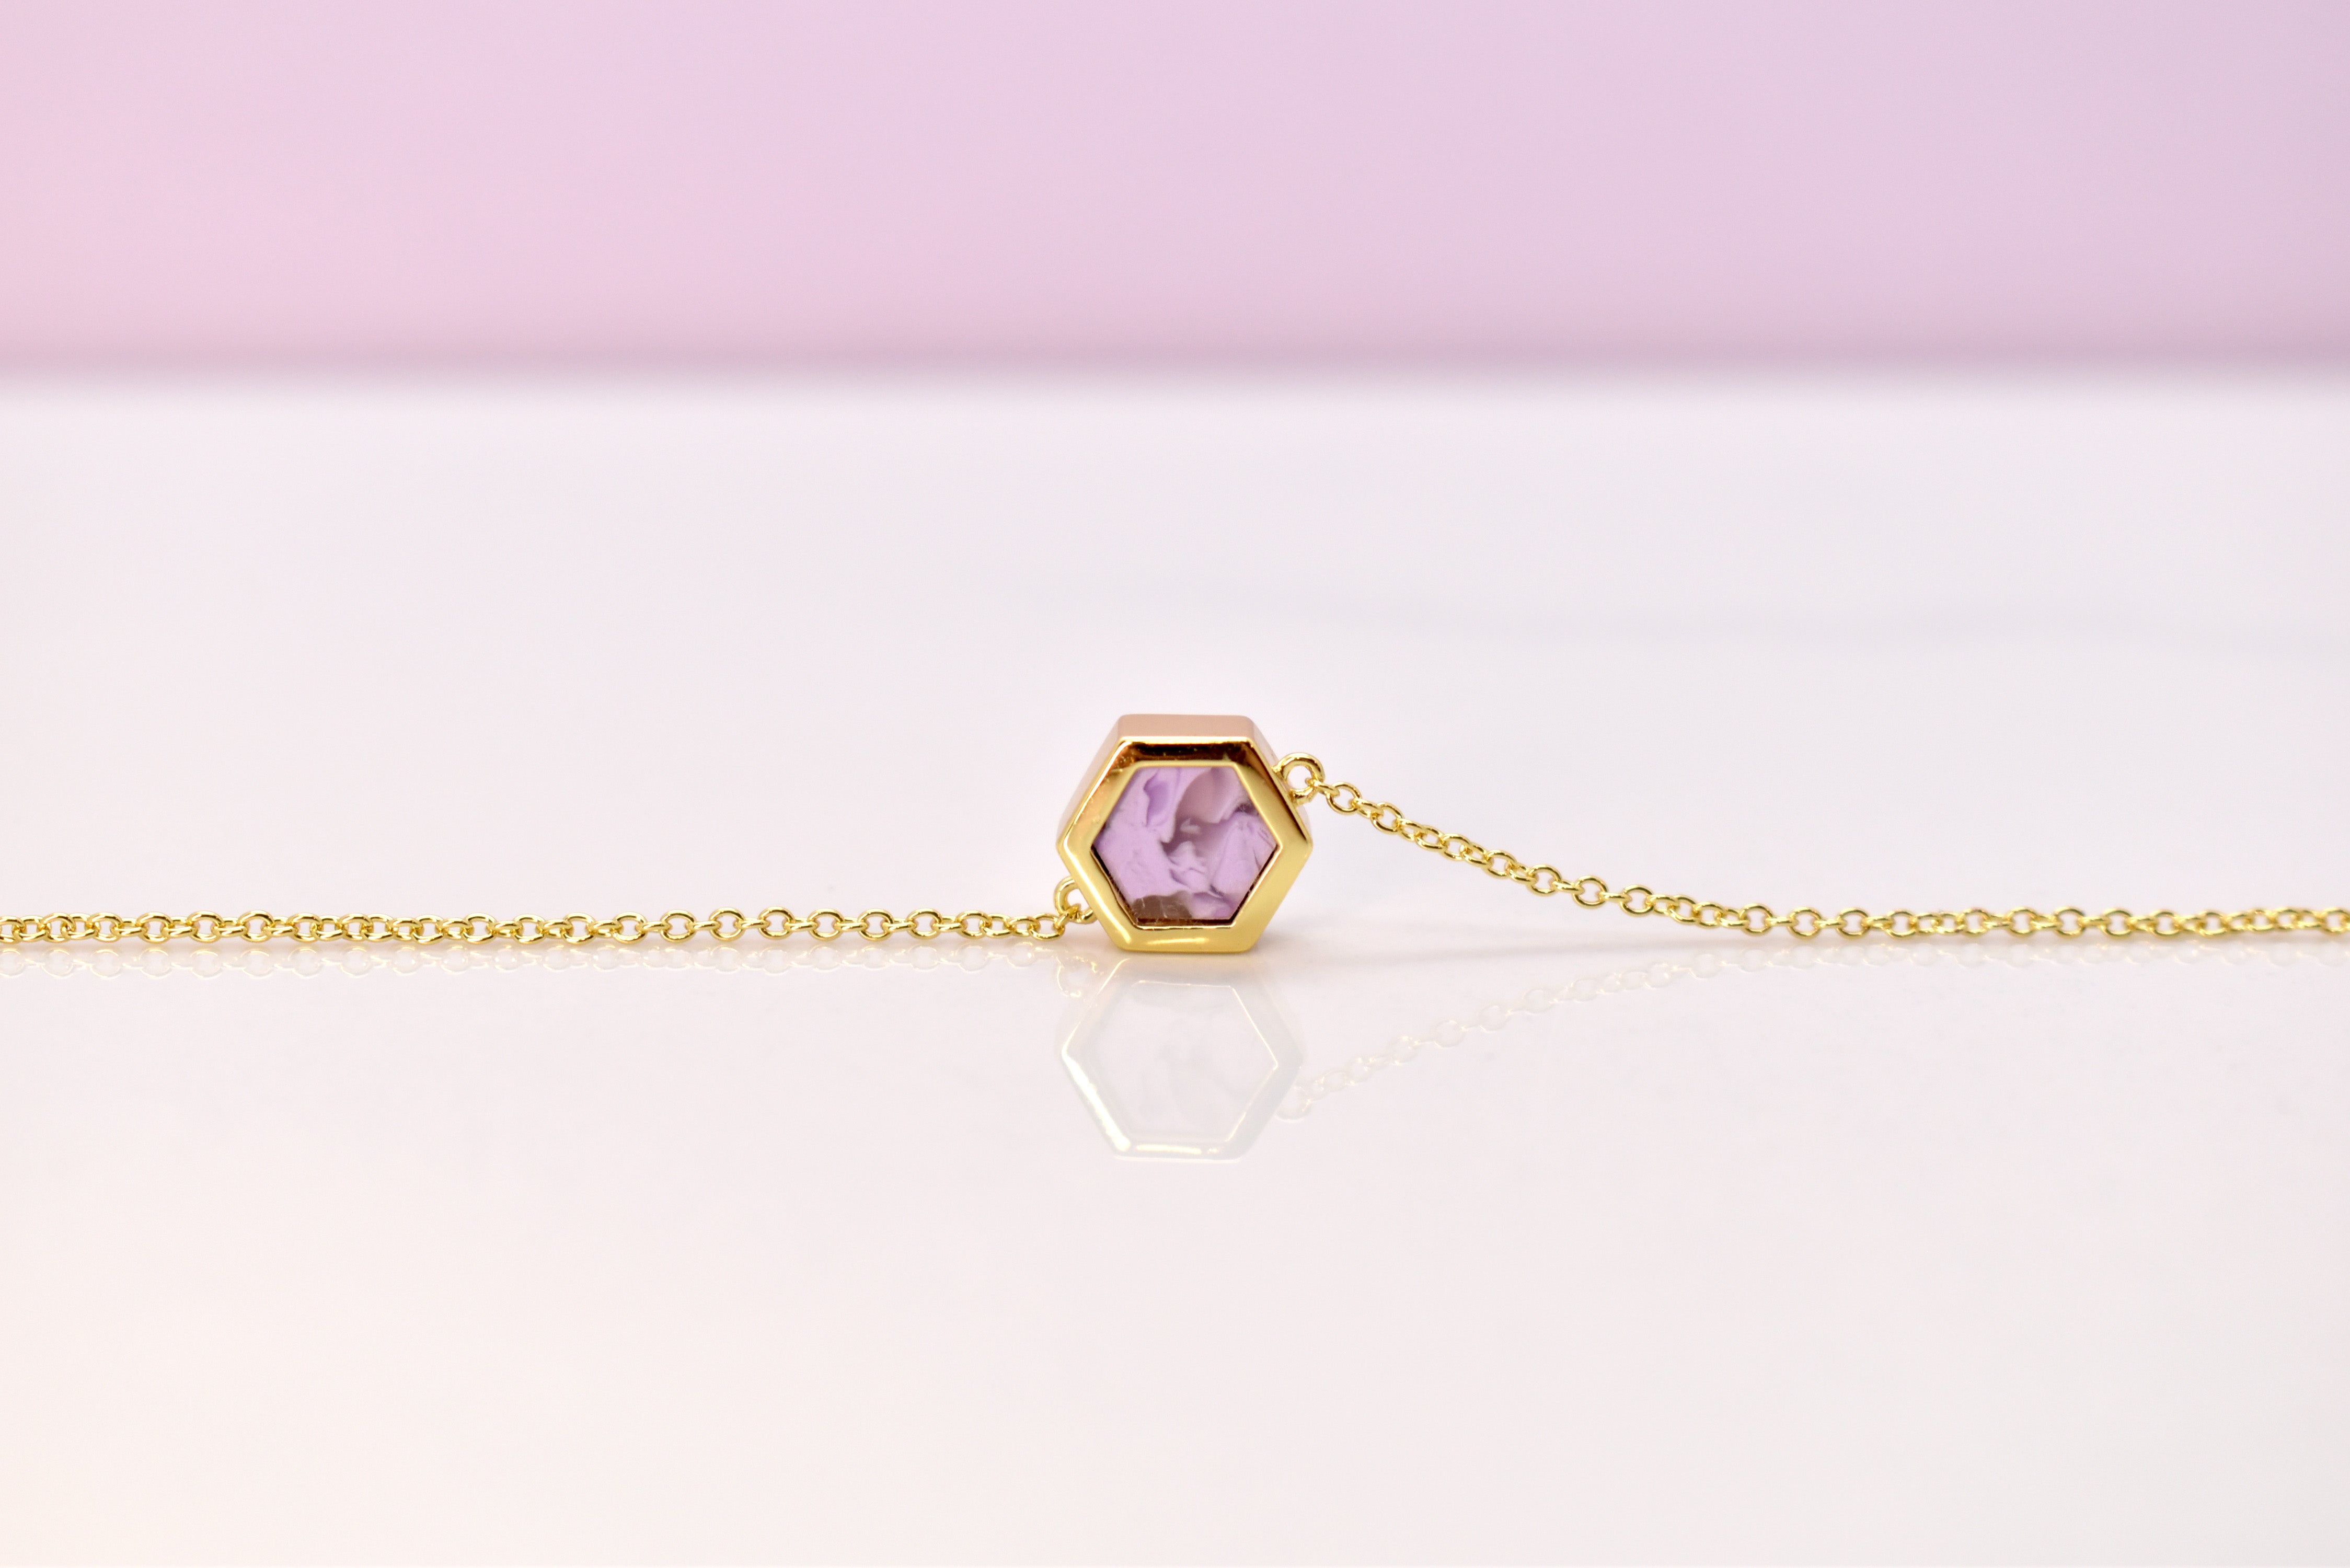 amethyst birthstone jewelry february birthday gift for her gemstone jewelry geometric necklace gold 14k fill